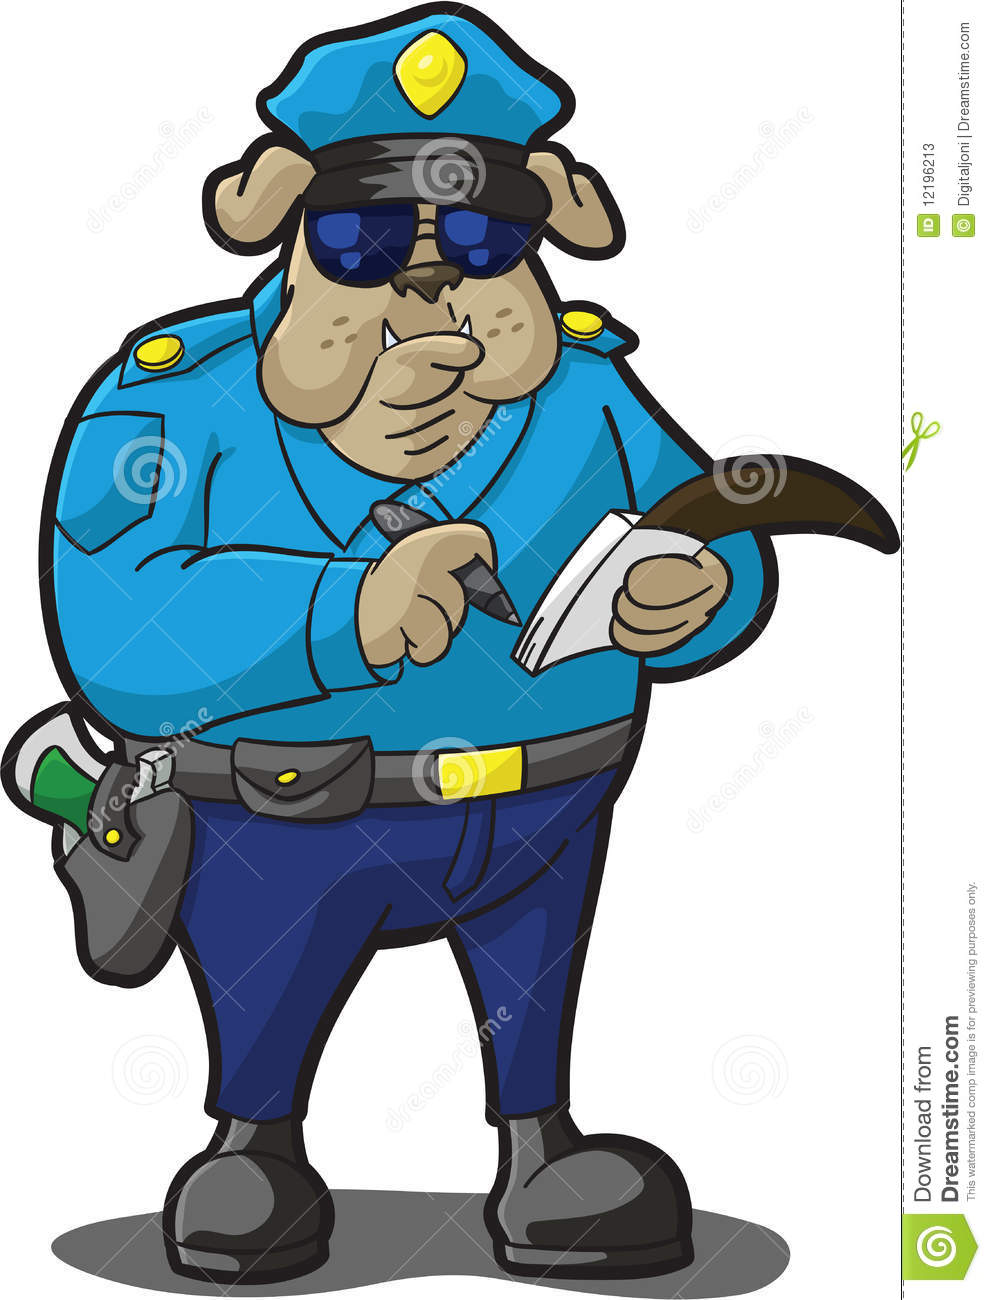 Cartoon Illustration Of A Bulldog In Police Uniform Writing Ticket